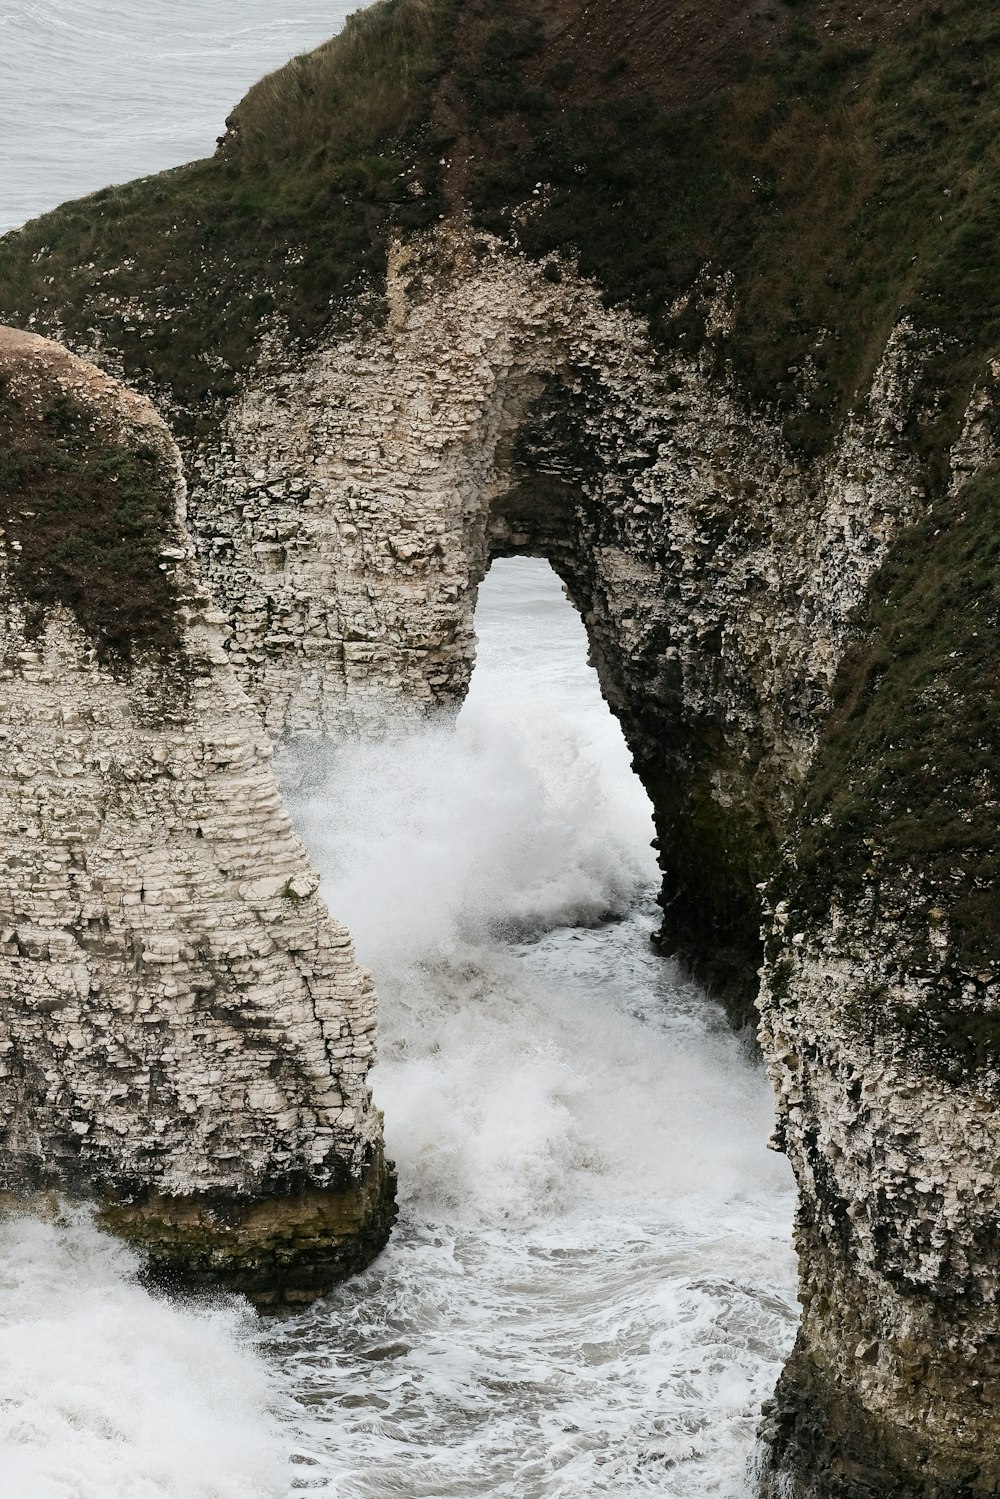 water falls between rocky mountain during daytime